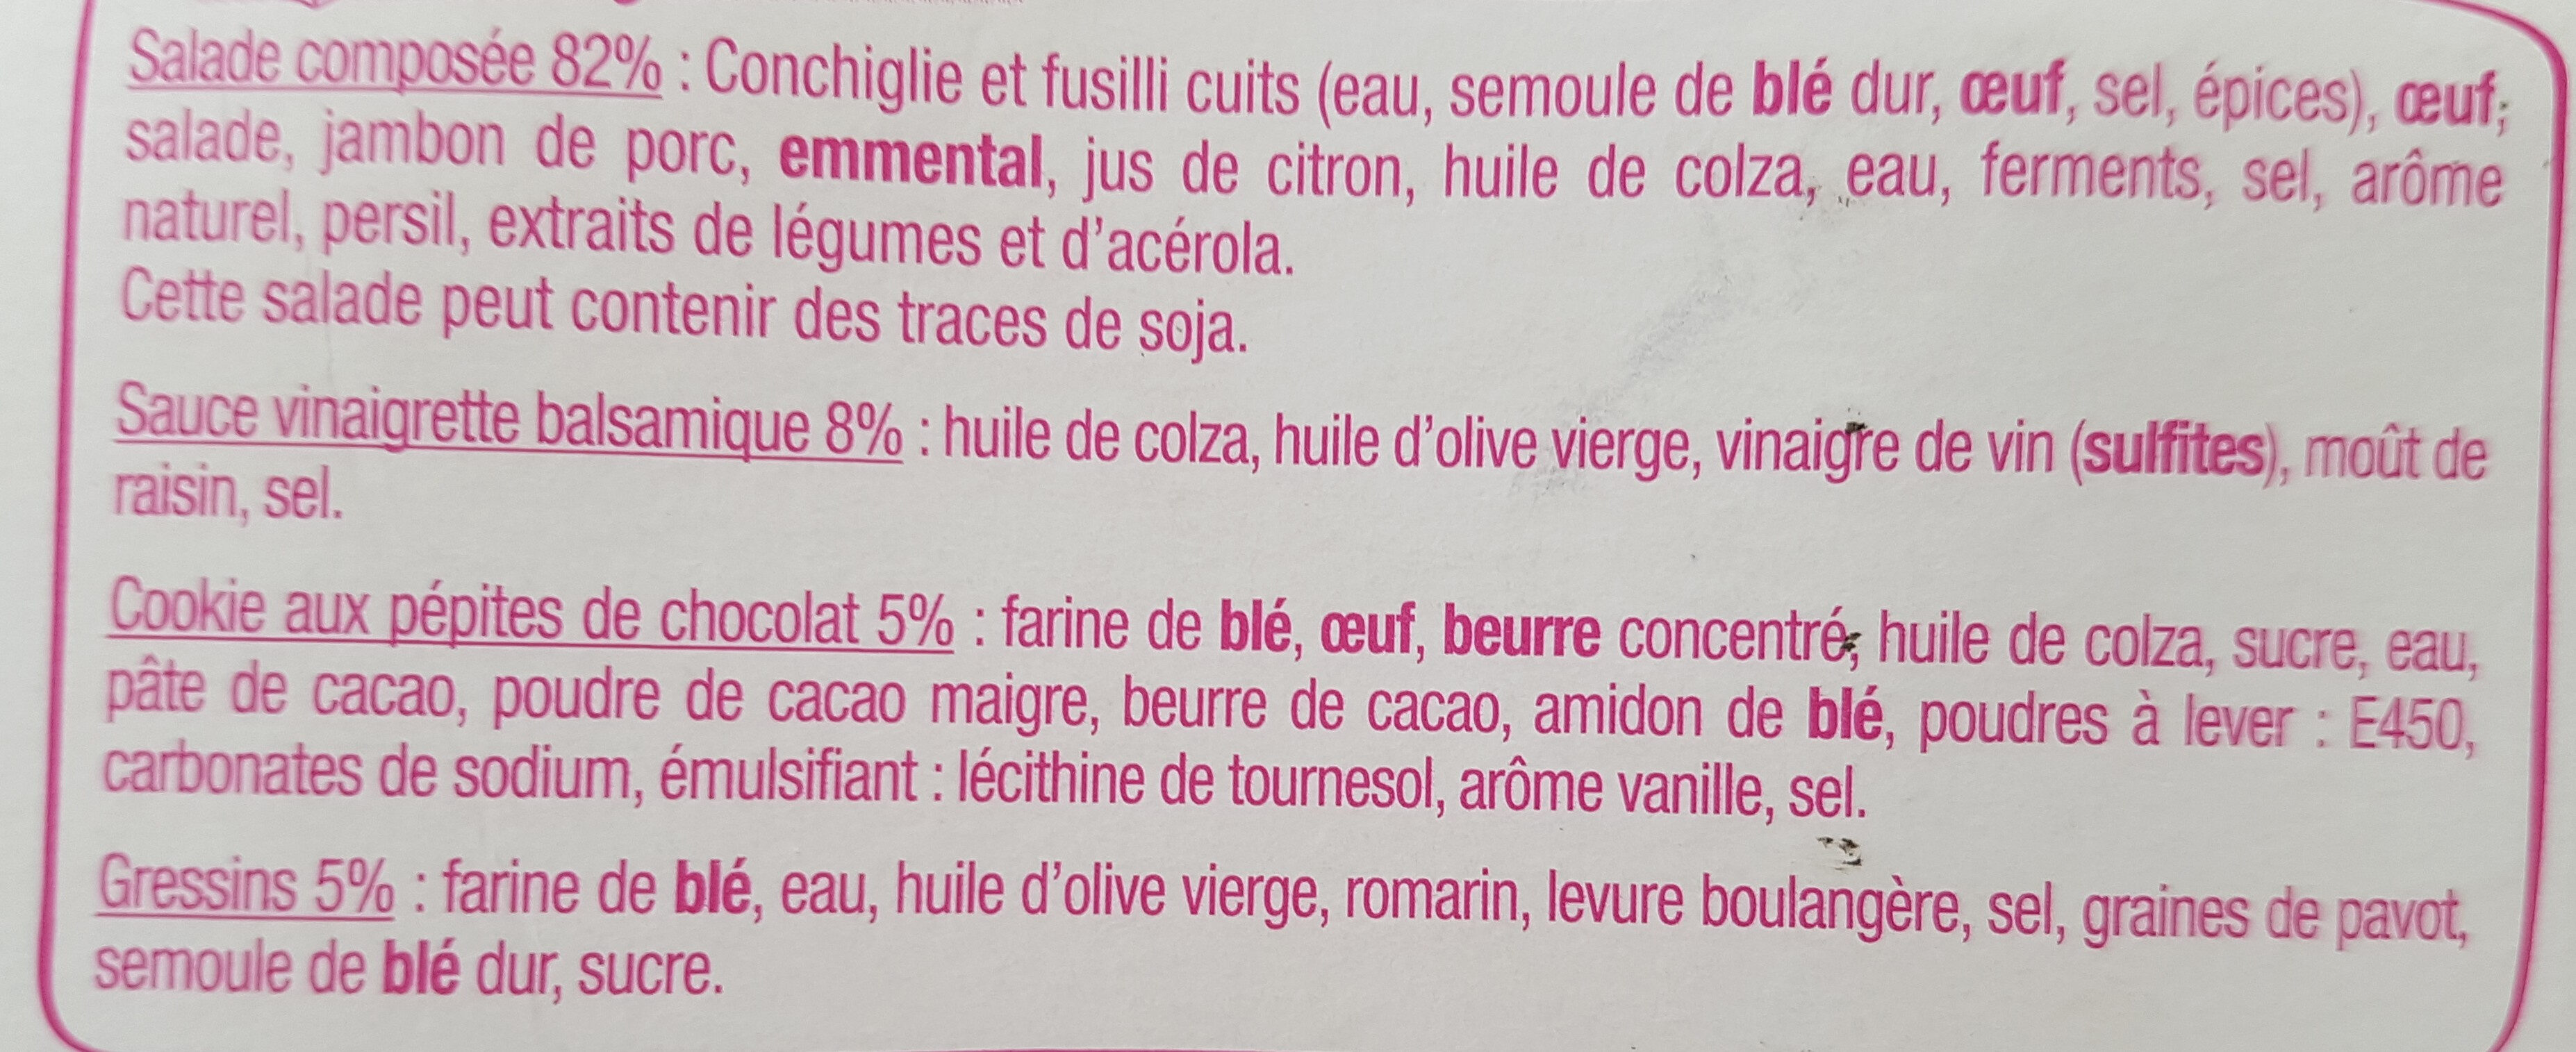 Salade & Compagnie - Montmartre - Ingrédients